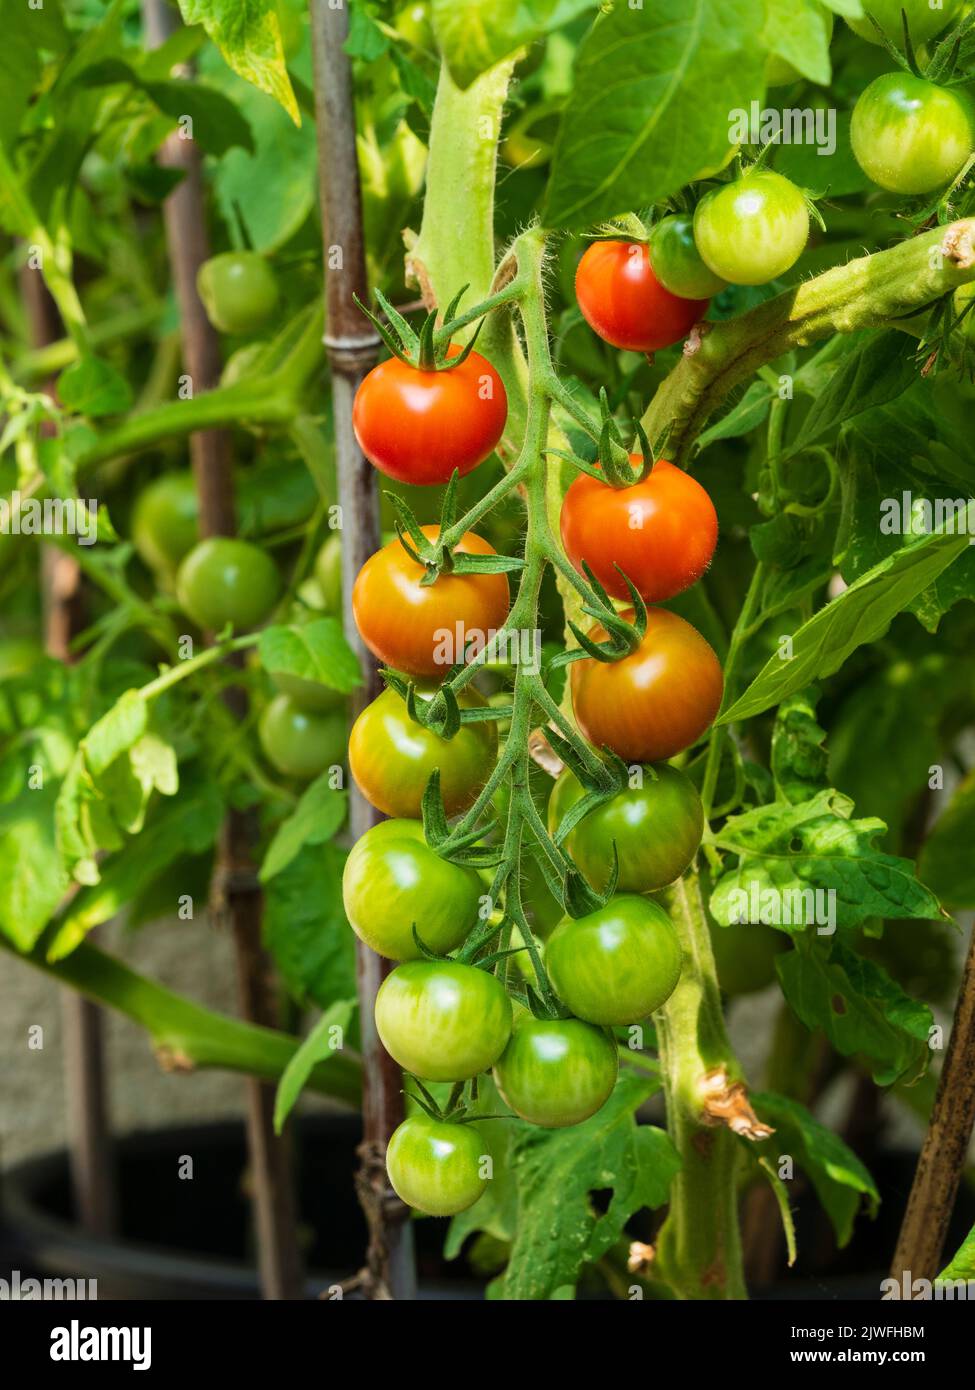 Rosso maturo, pomodori ciliegini maturi e non maturi, Solanum lycopersicum 'Gardener's Delight' in una stagione estiva successiva Foto Stock